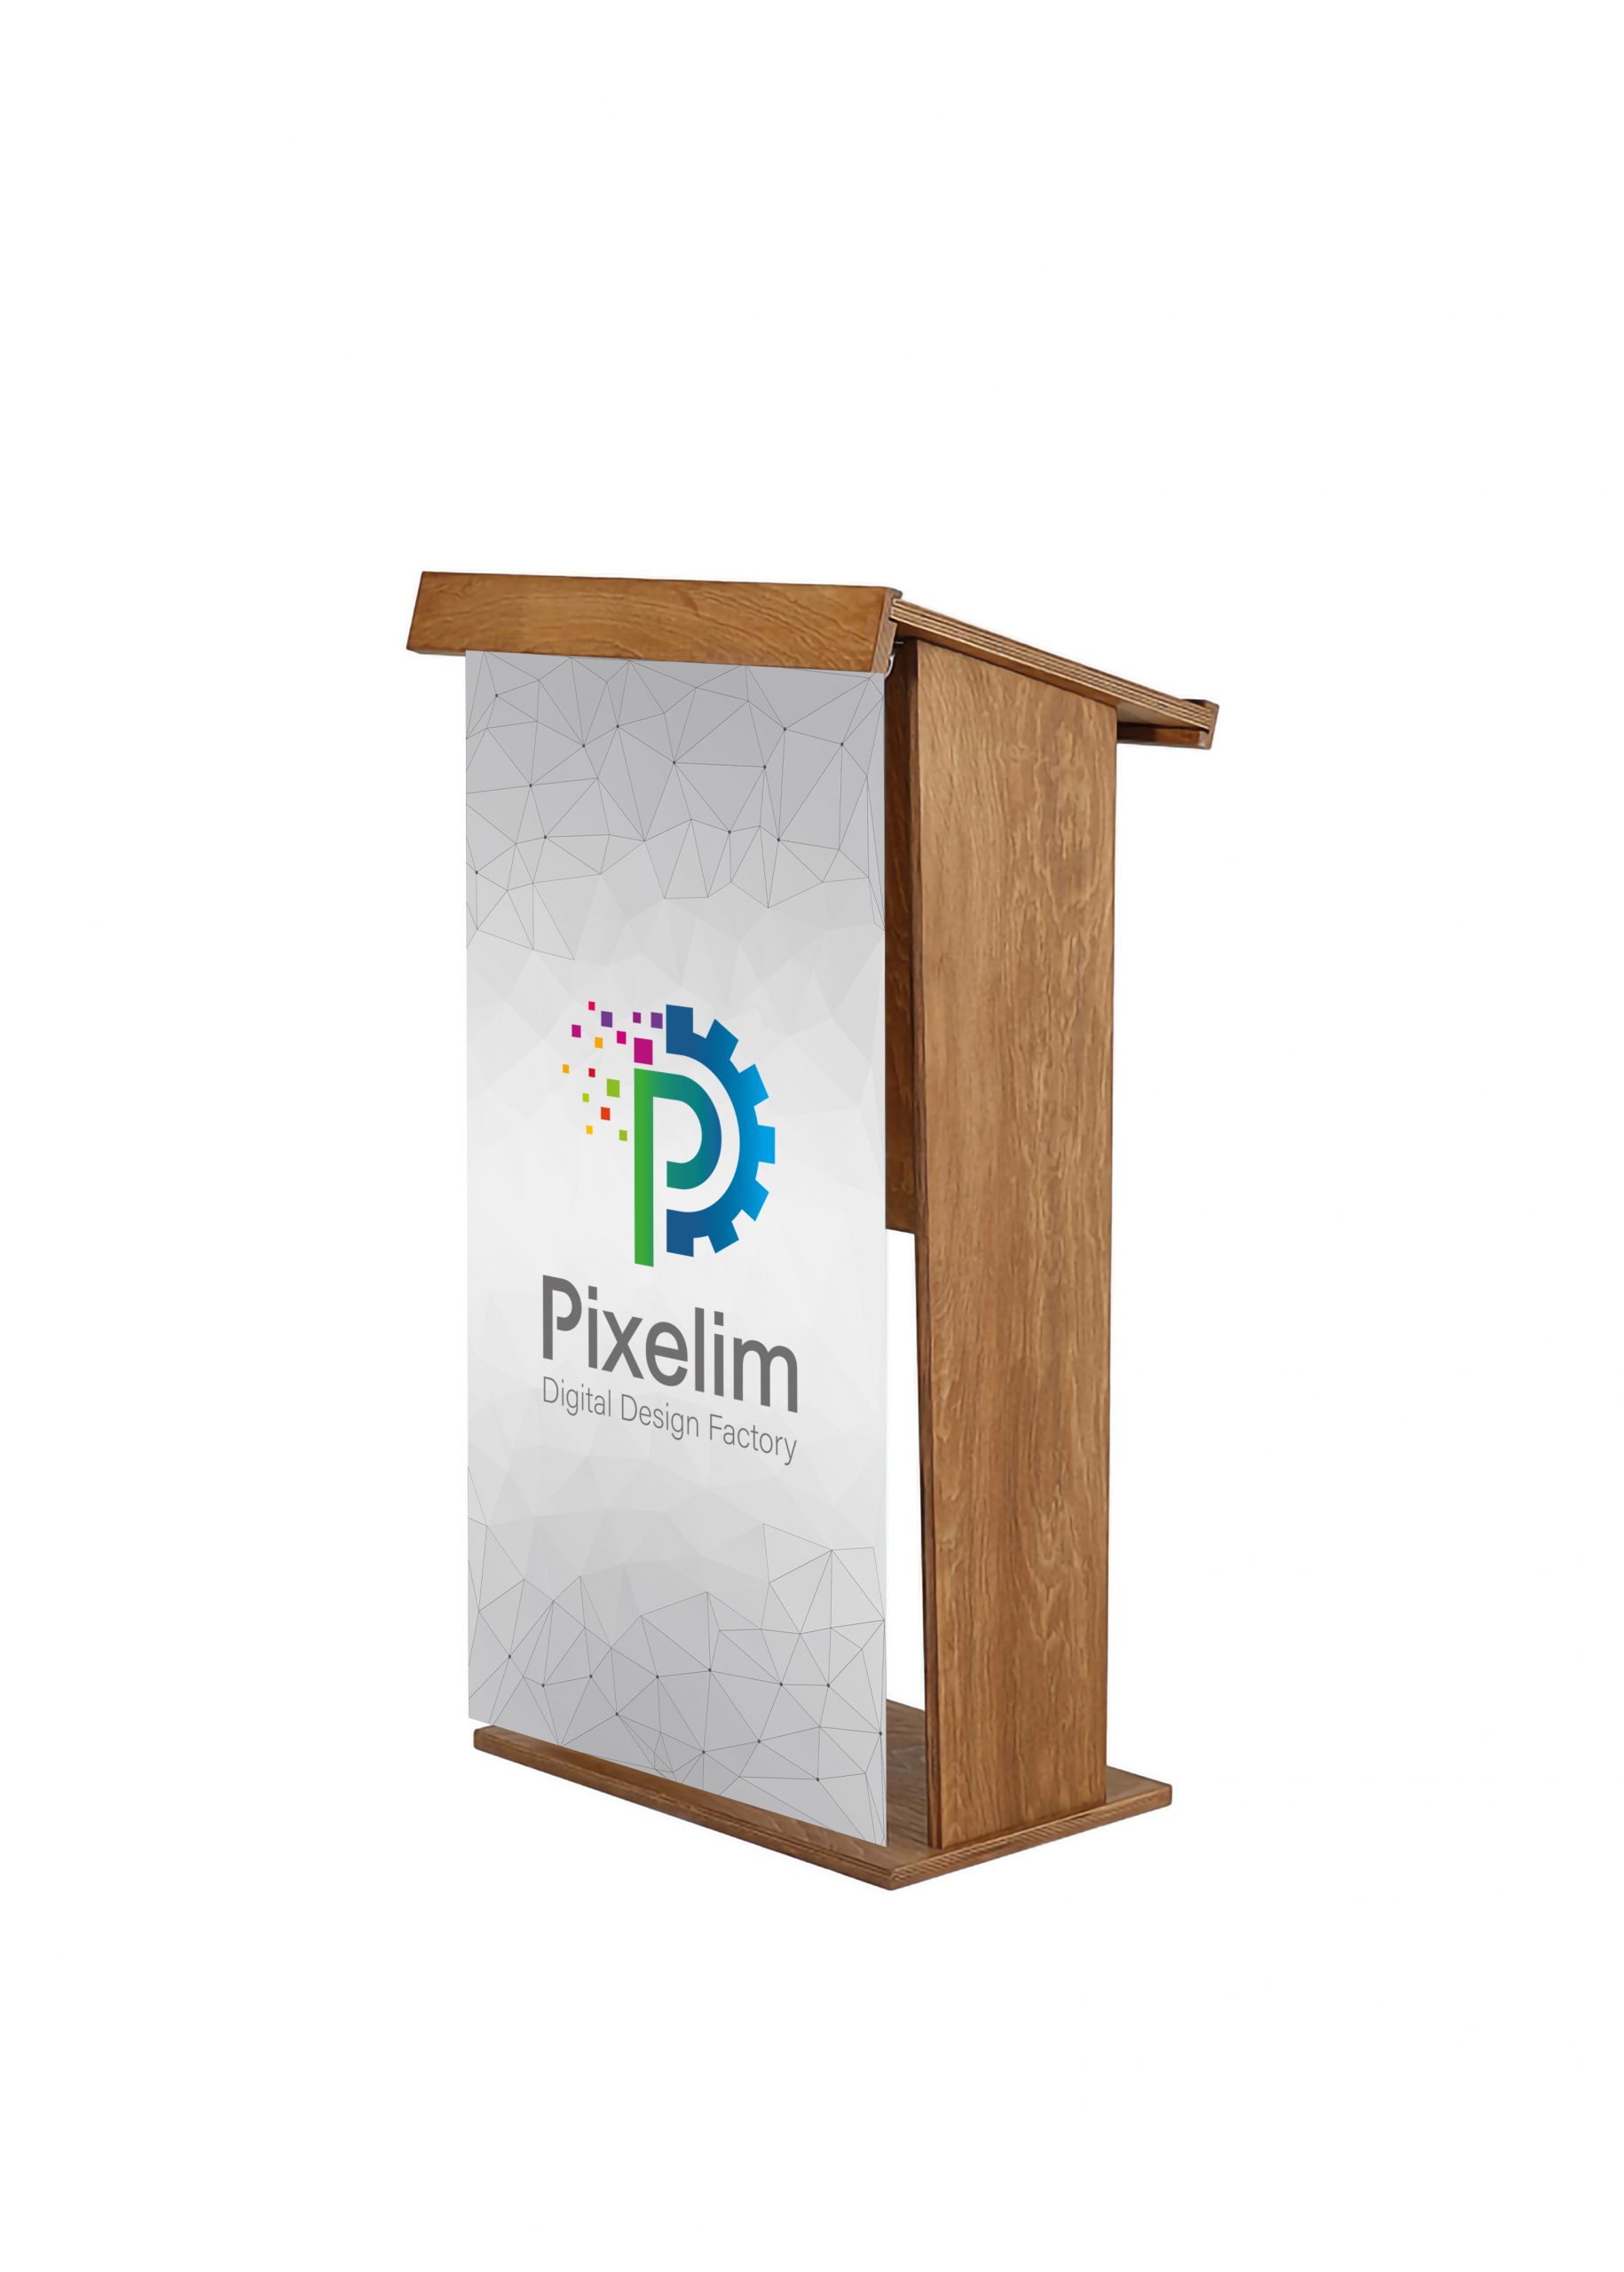 Wooden podium